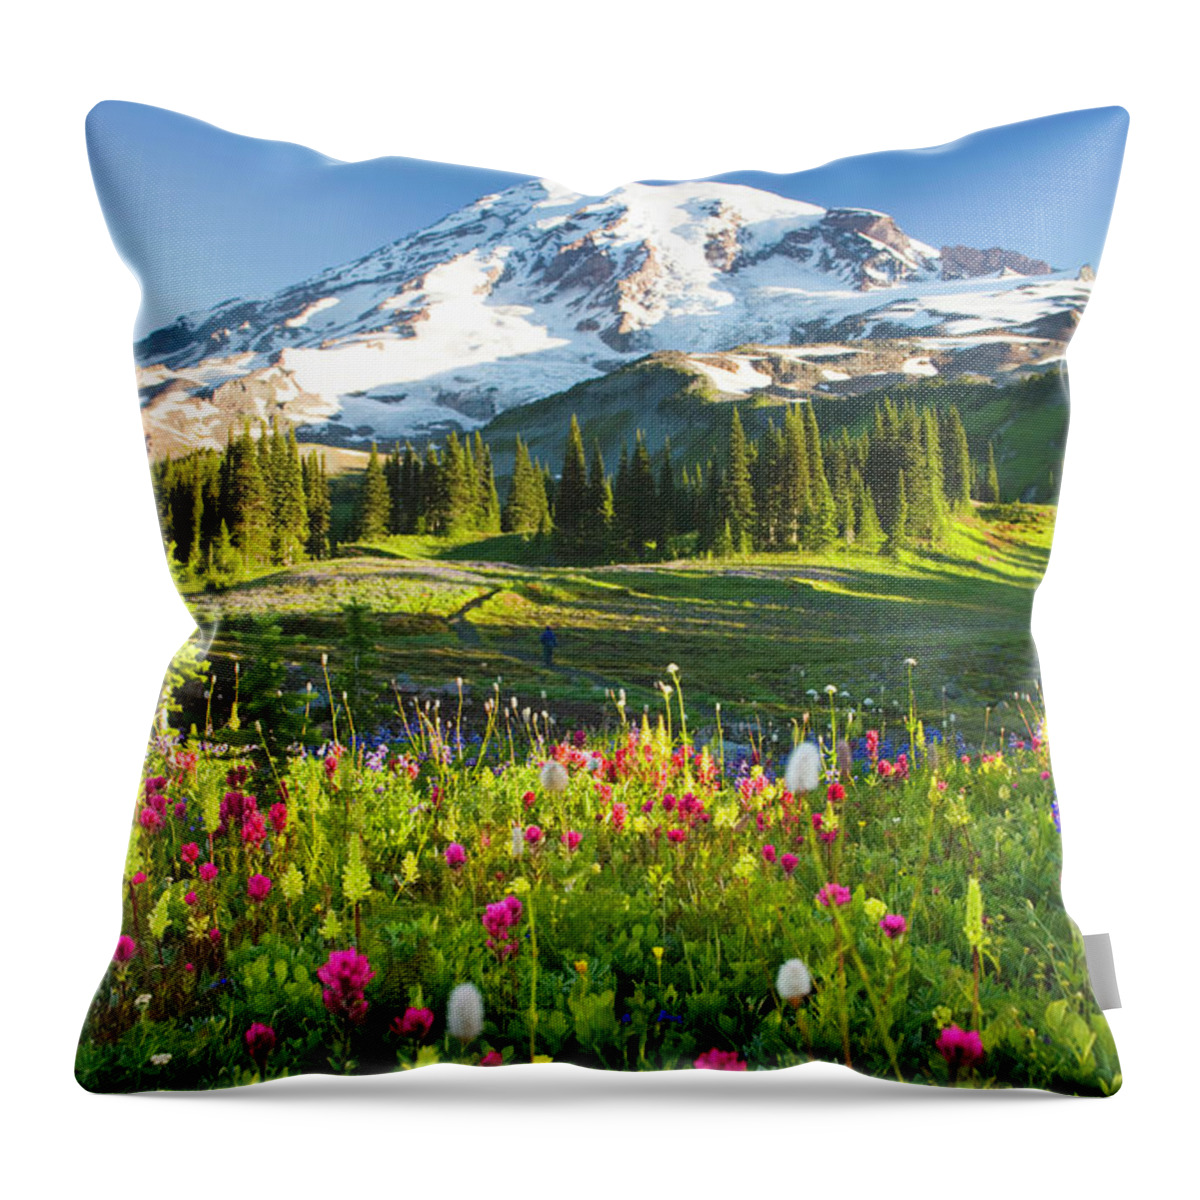 Scenics Throw Pillow featuring the photograph Usa, Washington, Mt. Rainier National by Rene Frederick